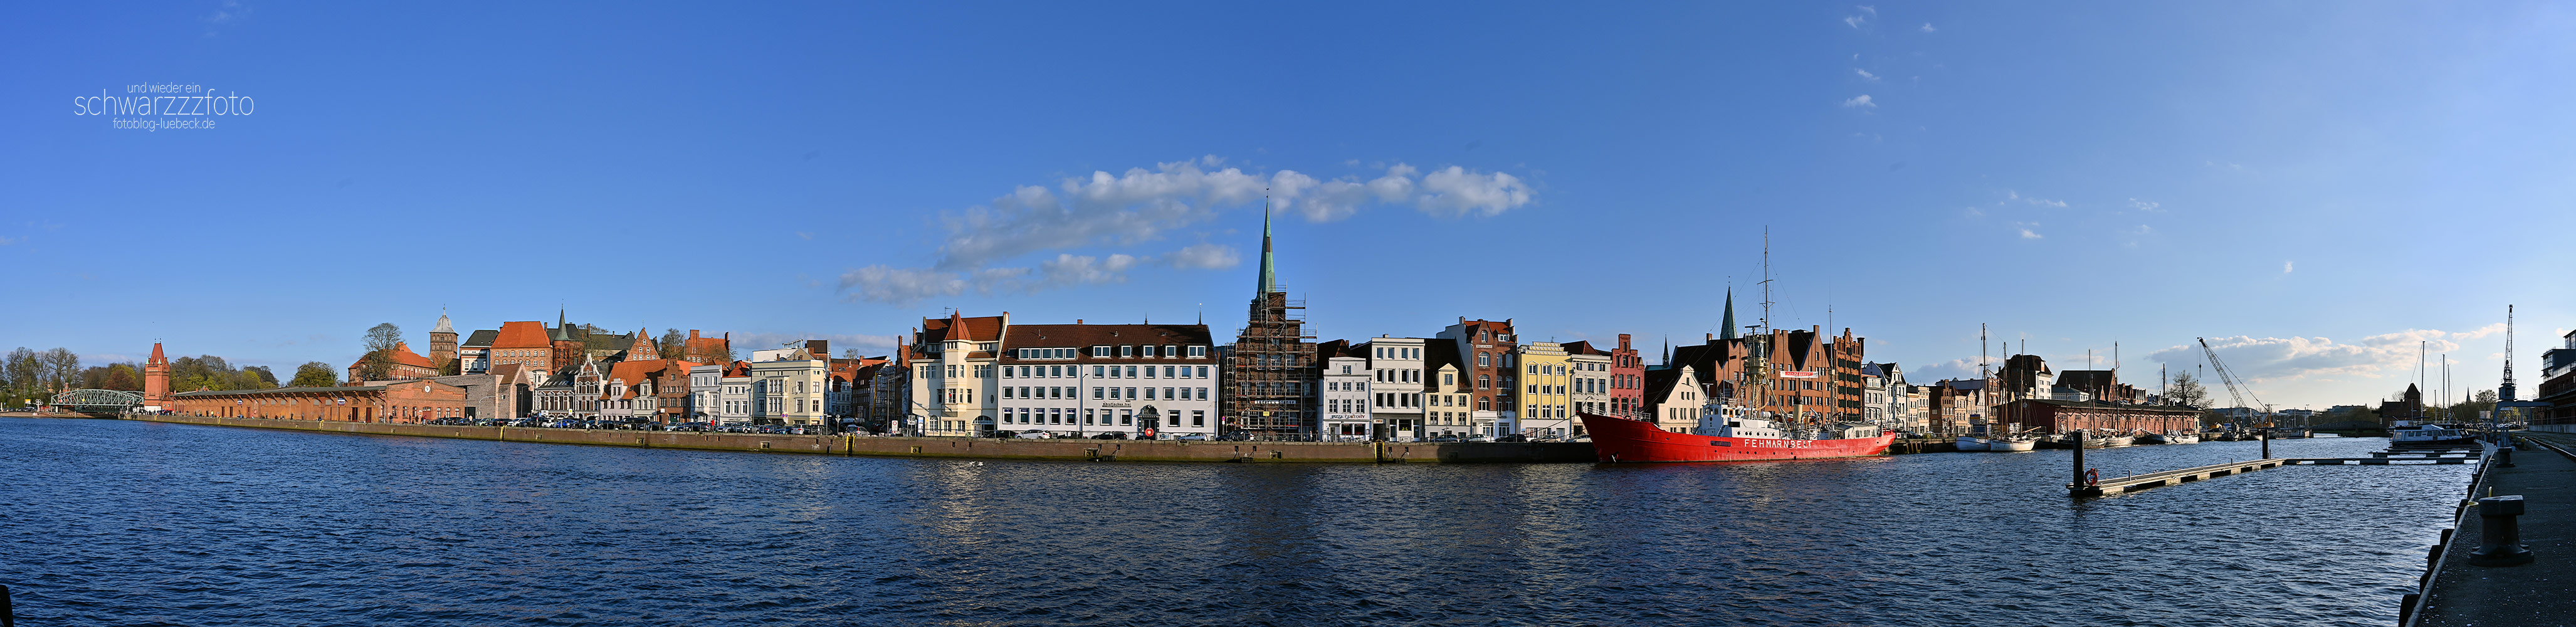 Lübeck-Panorama 2019